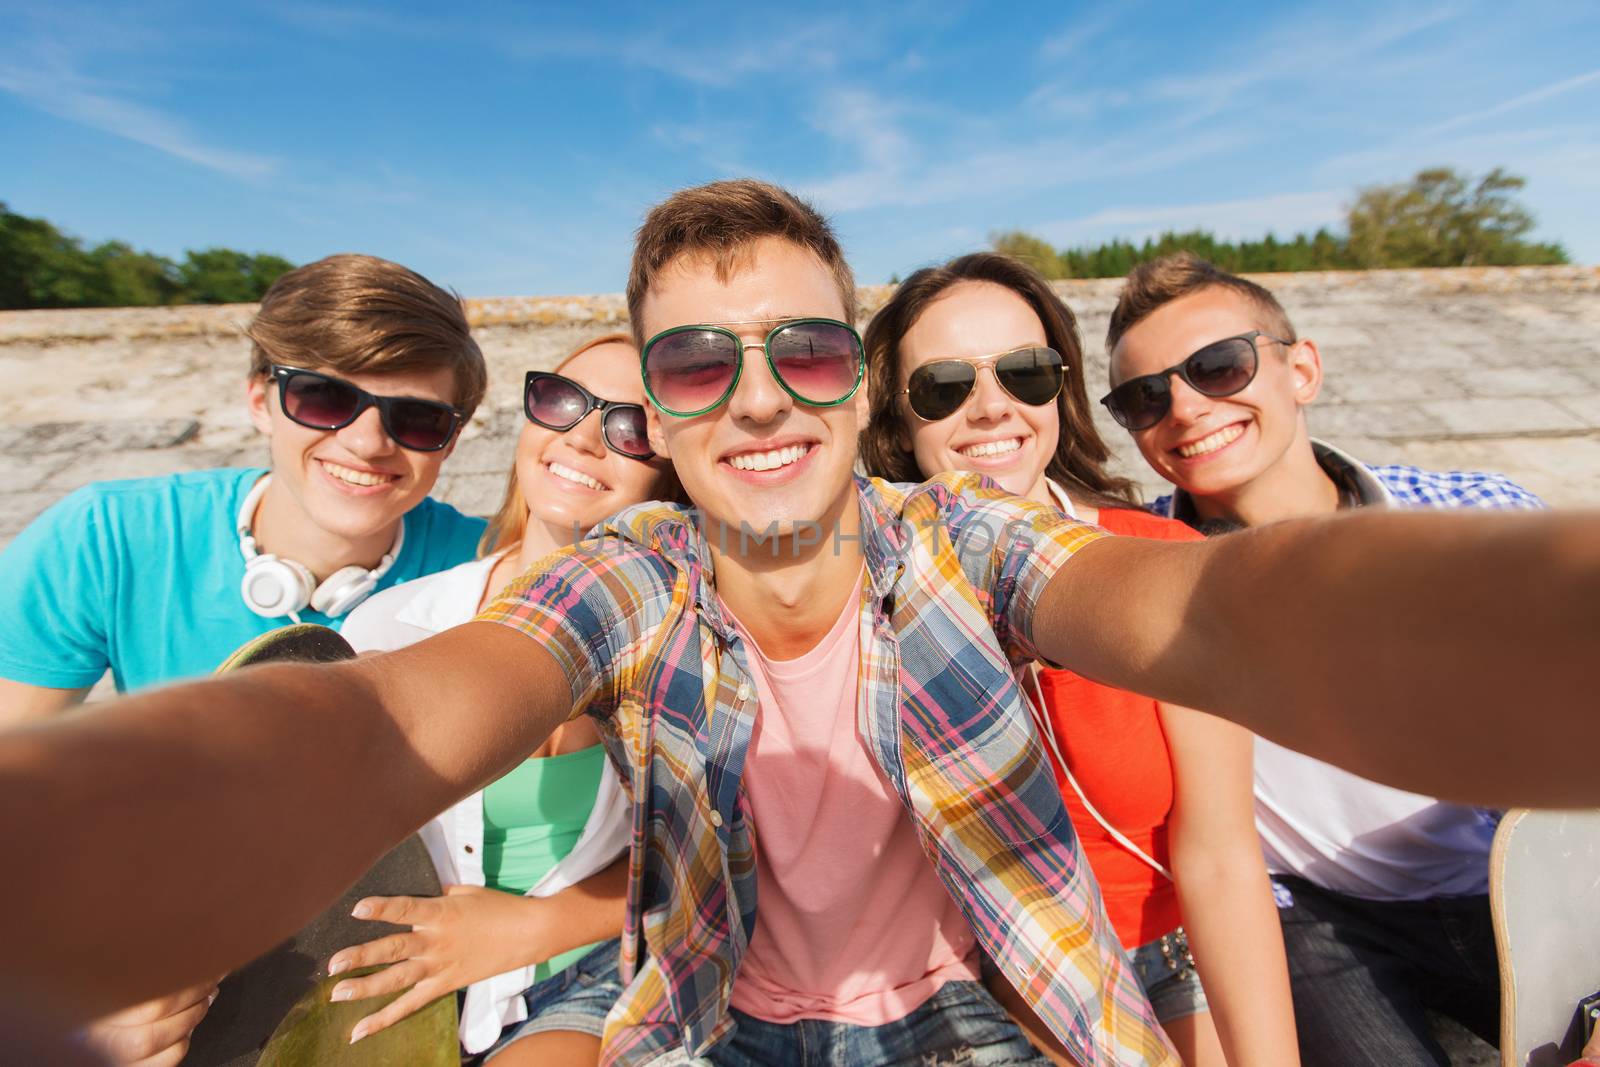 group of smiling friends making selfie outdoors by dolgachov